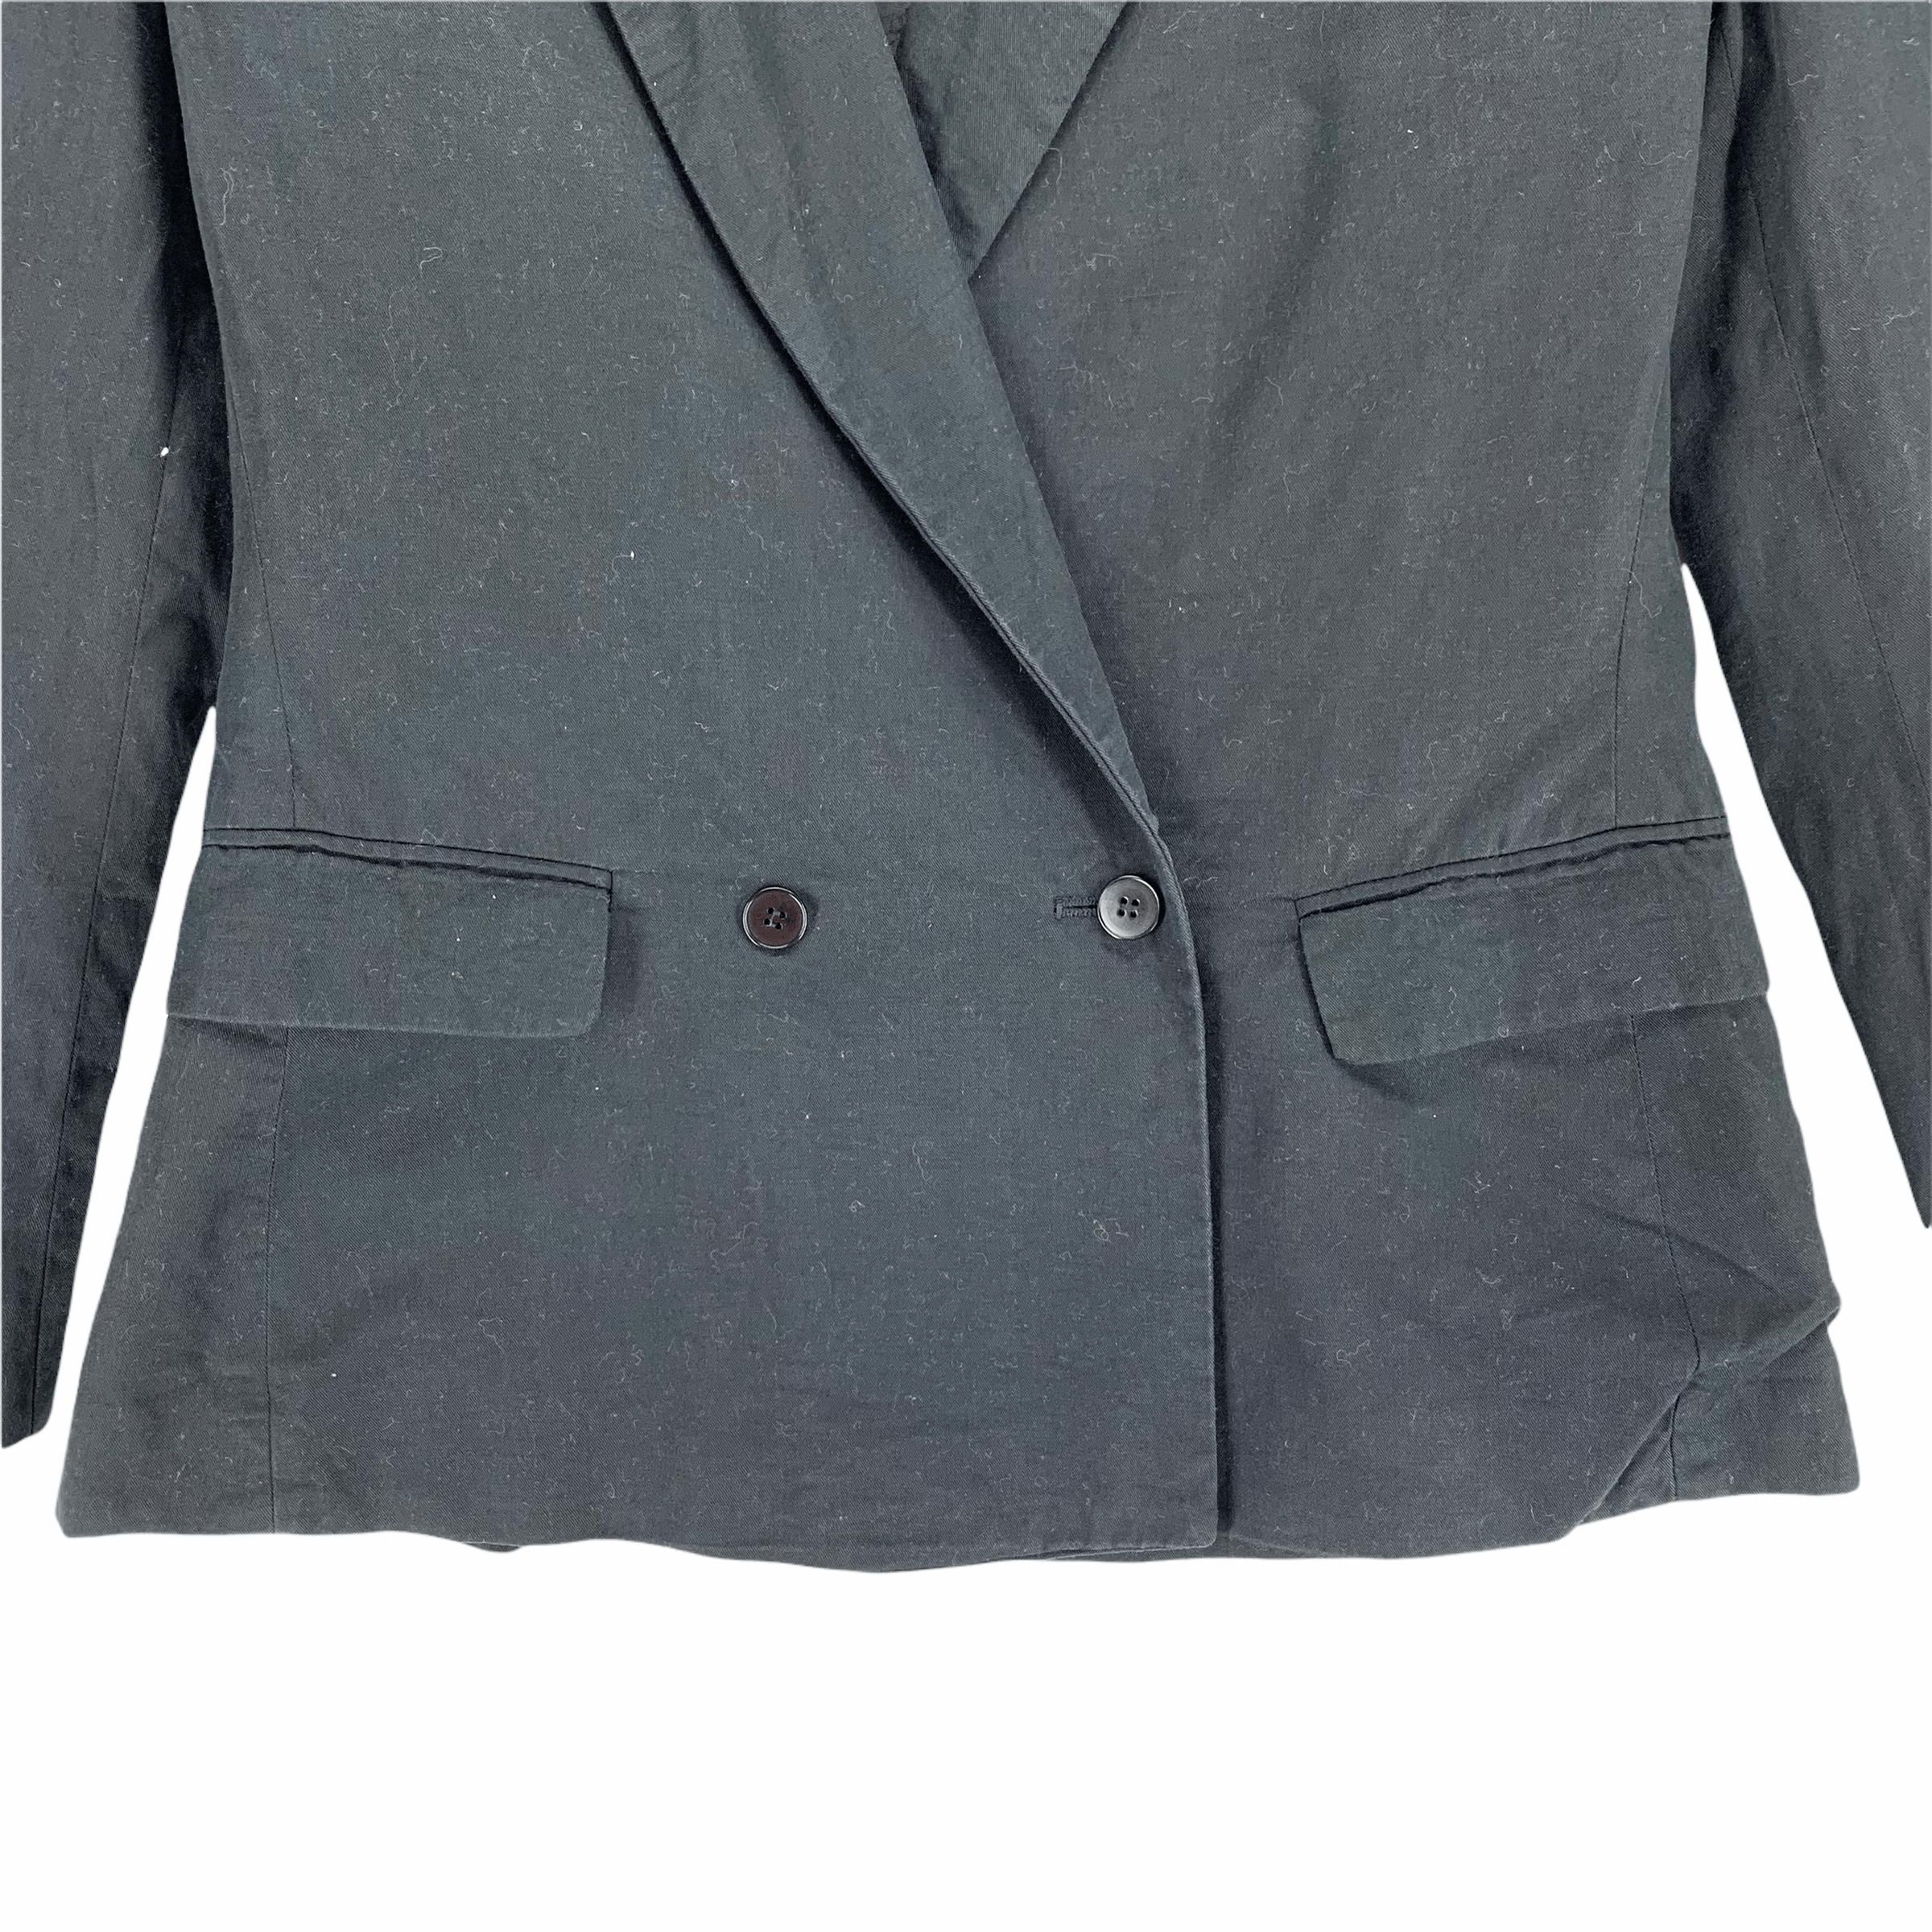 Agnes B. Agnes B. Made in Japan Suit Jacket / Blazer #3276-117 Size XS / US 0-2 / IT 36-38 - 3 Thumbnail